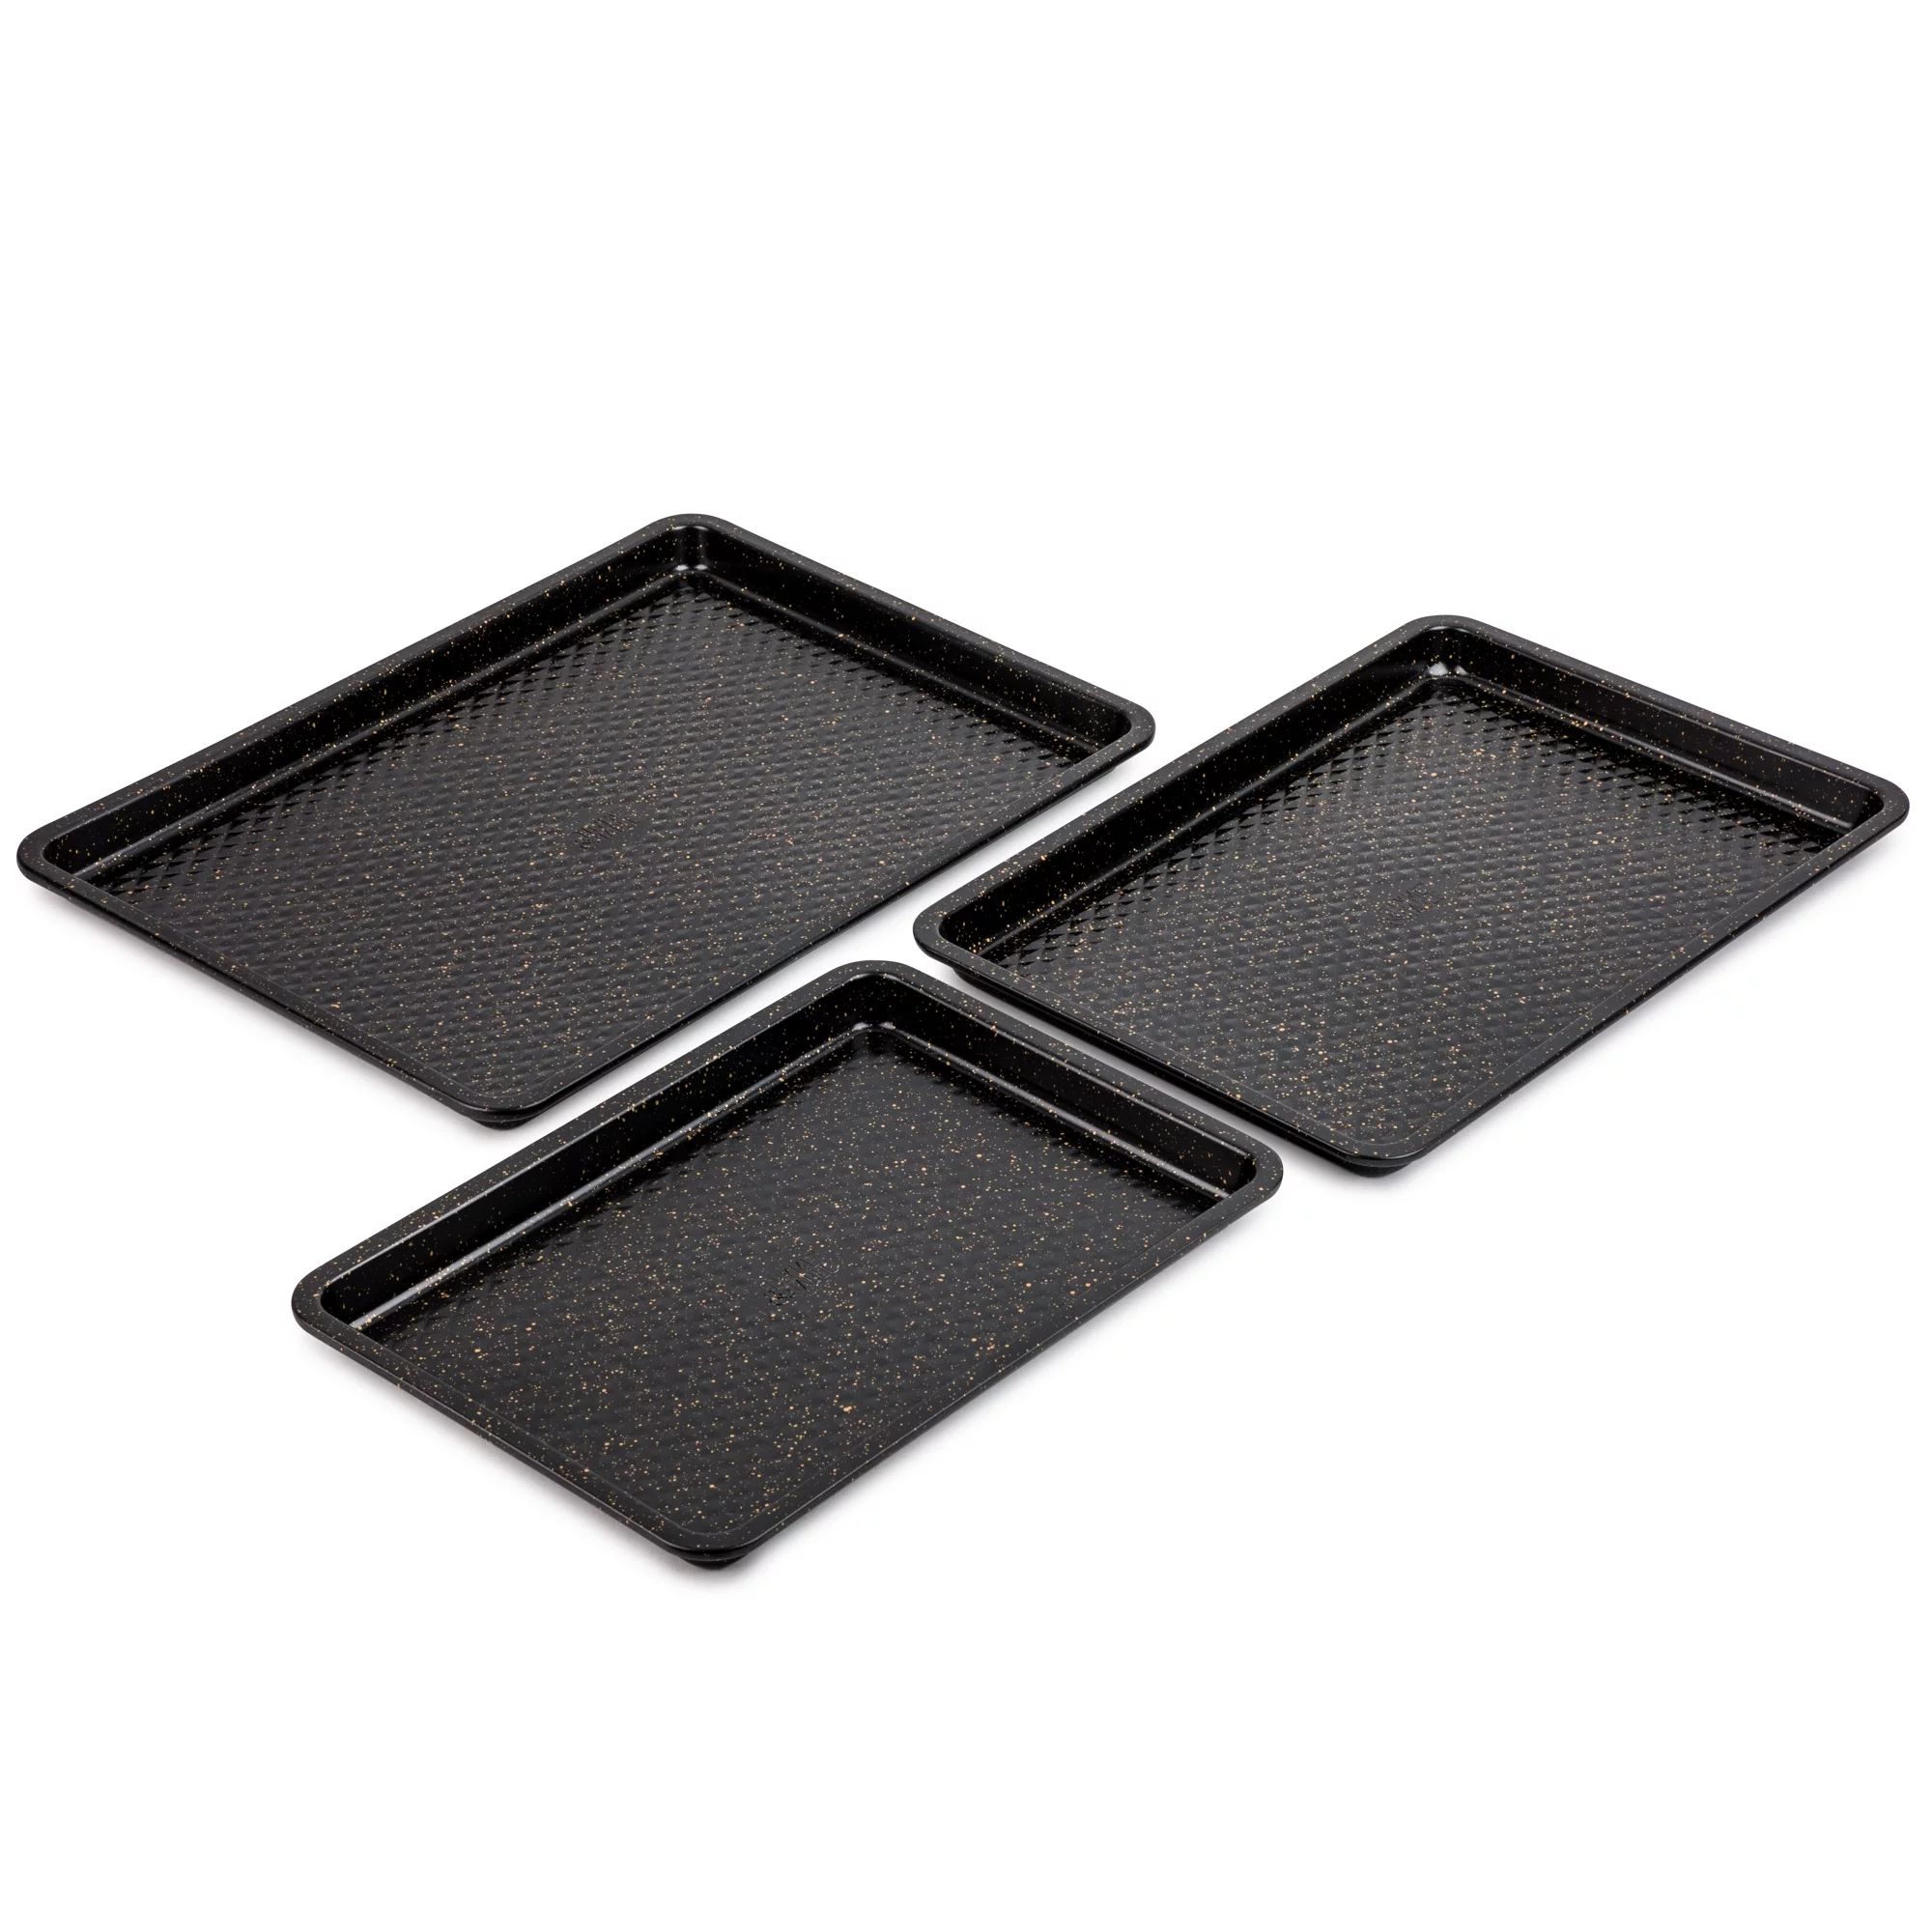 Thyme & Table Nonstick Sheet Pan 3-Piece Set, Black | Walmart (US)